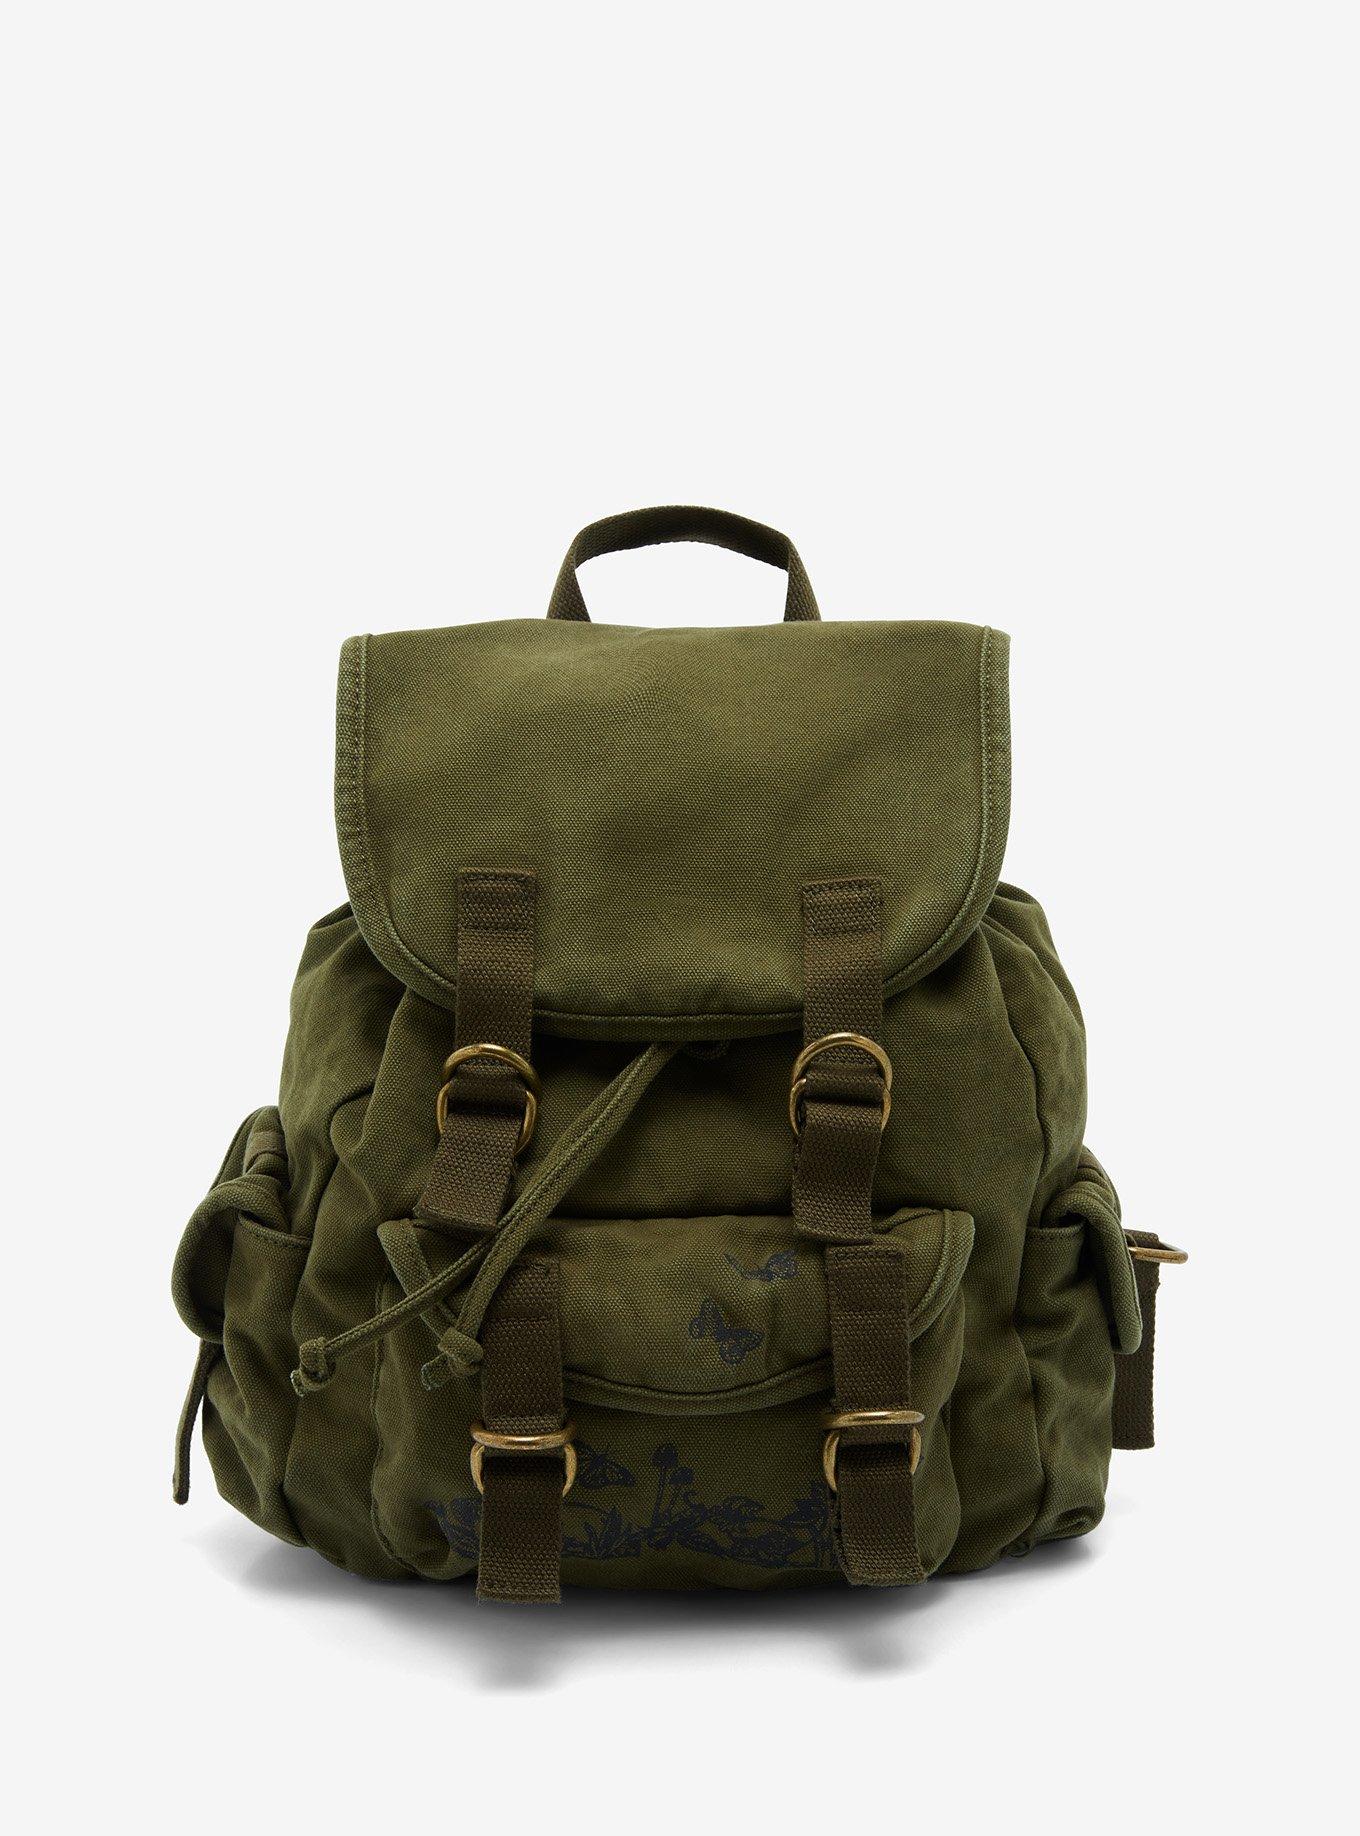 Green Fairy Grunge Slouch Mini Backpack